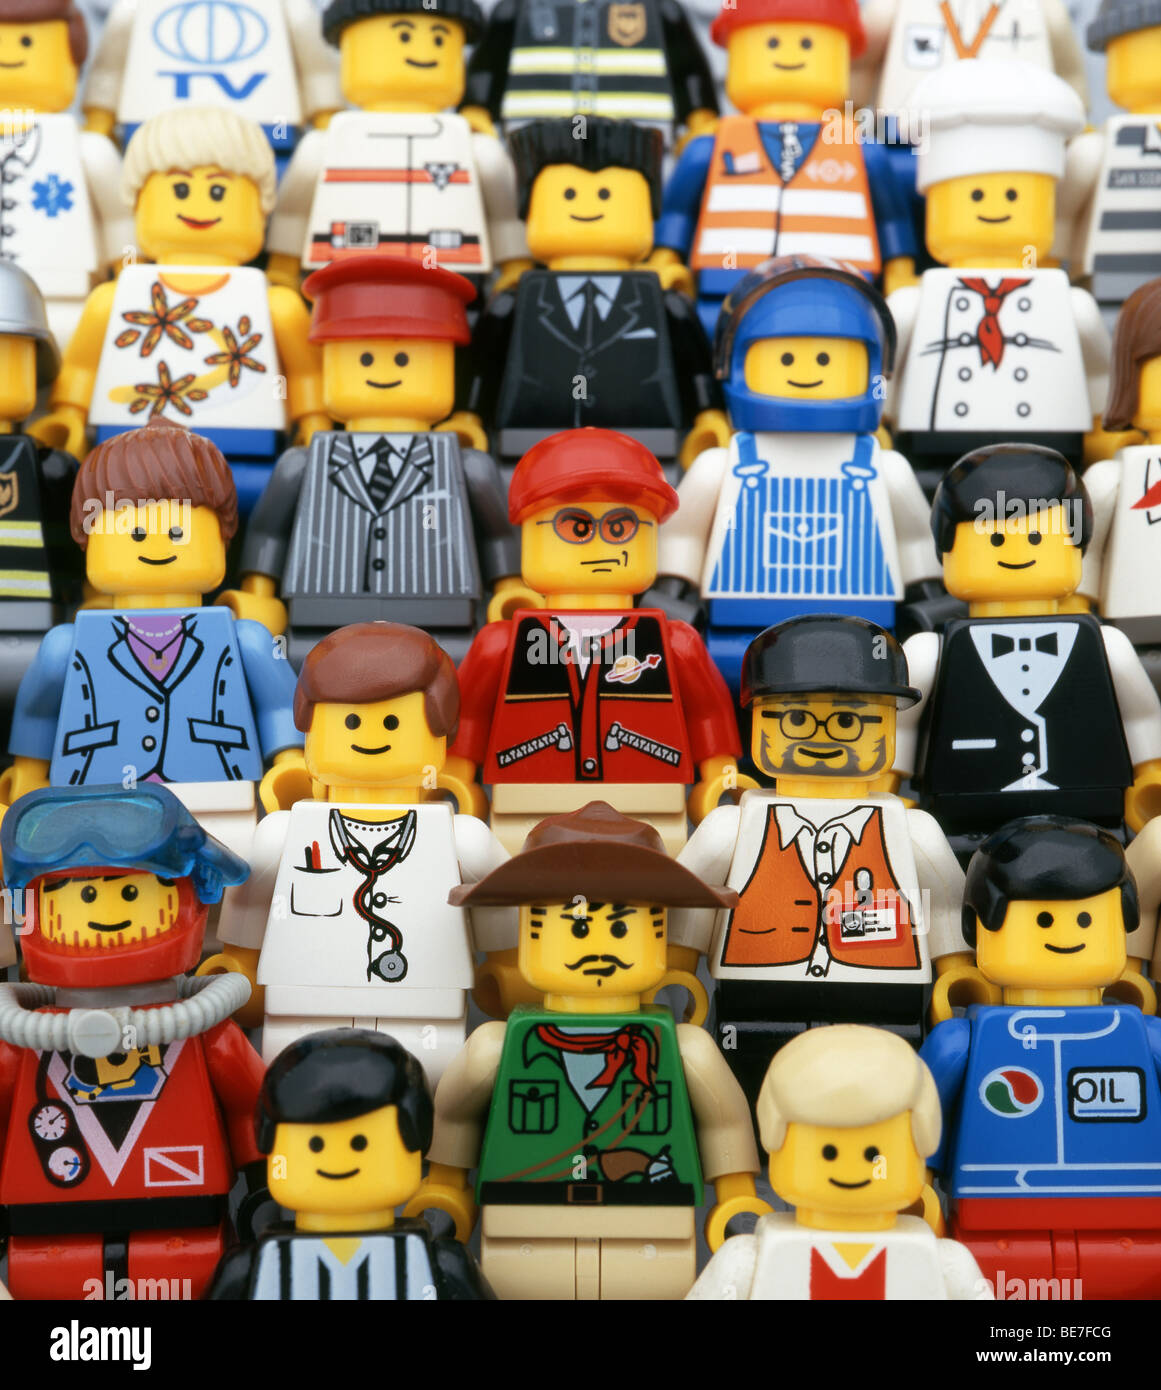 Lego Minifigures Stock Photo